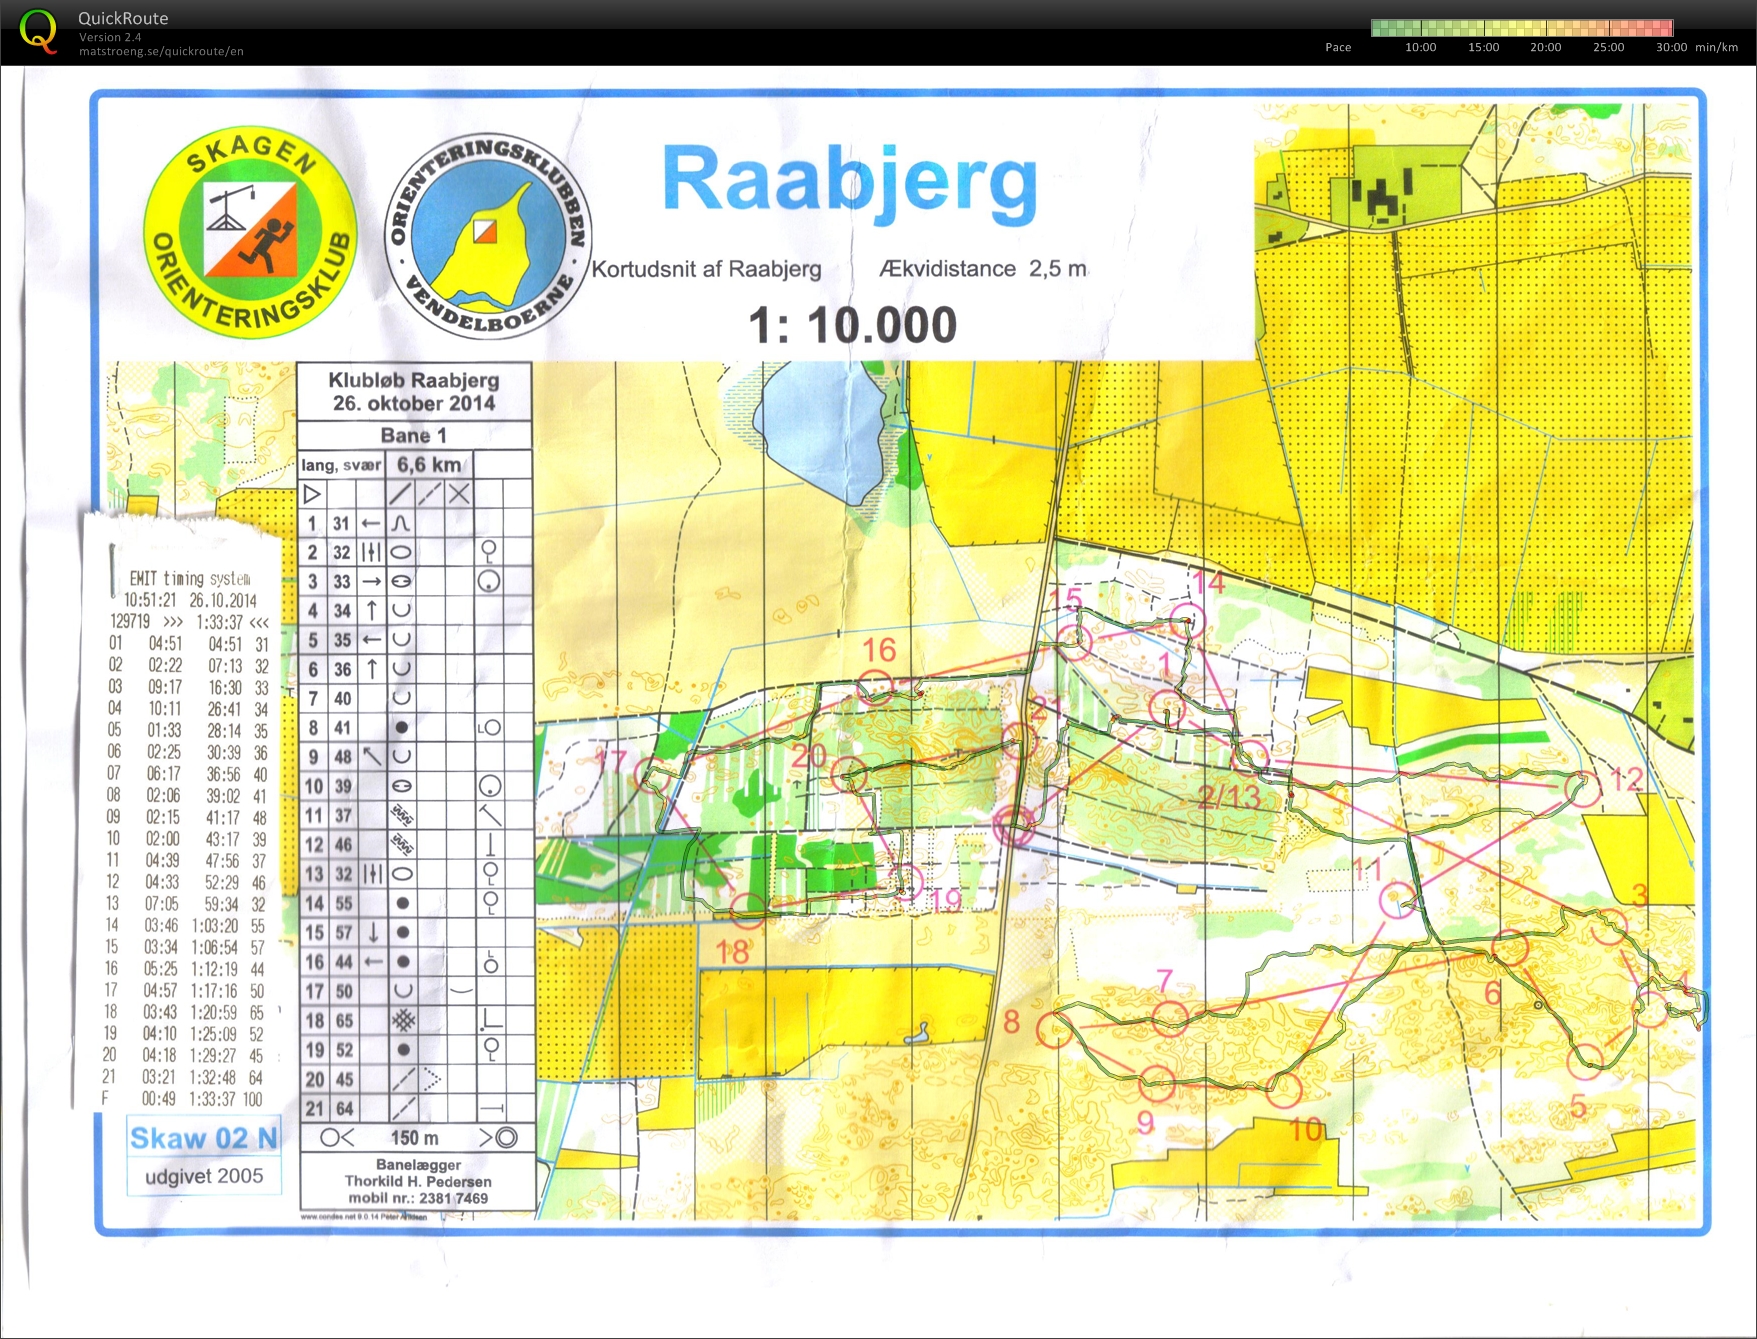 Raabjerg (27.10.2014)